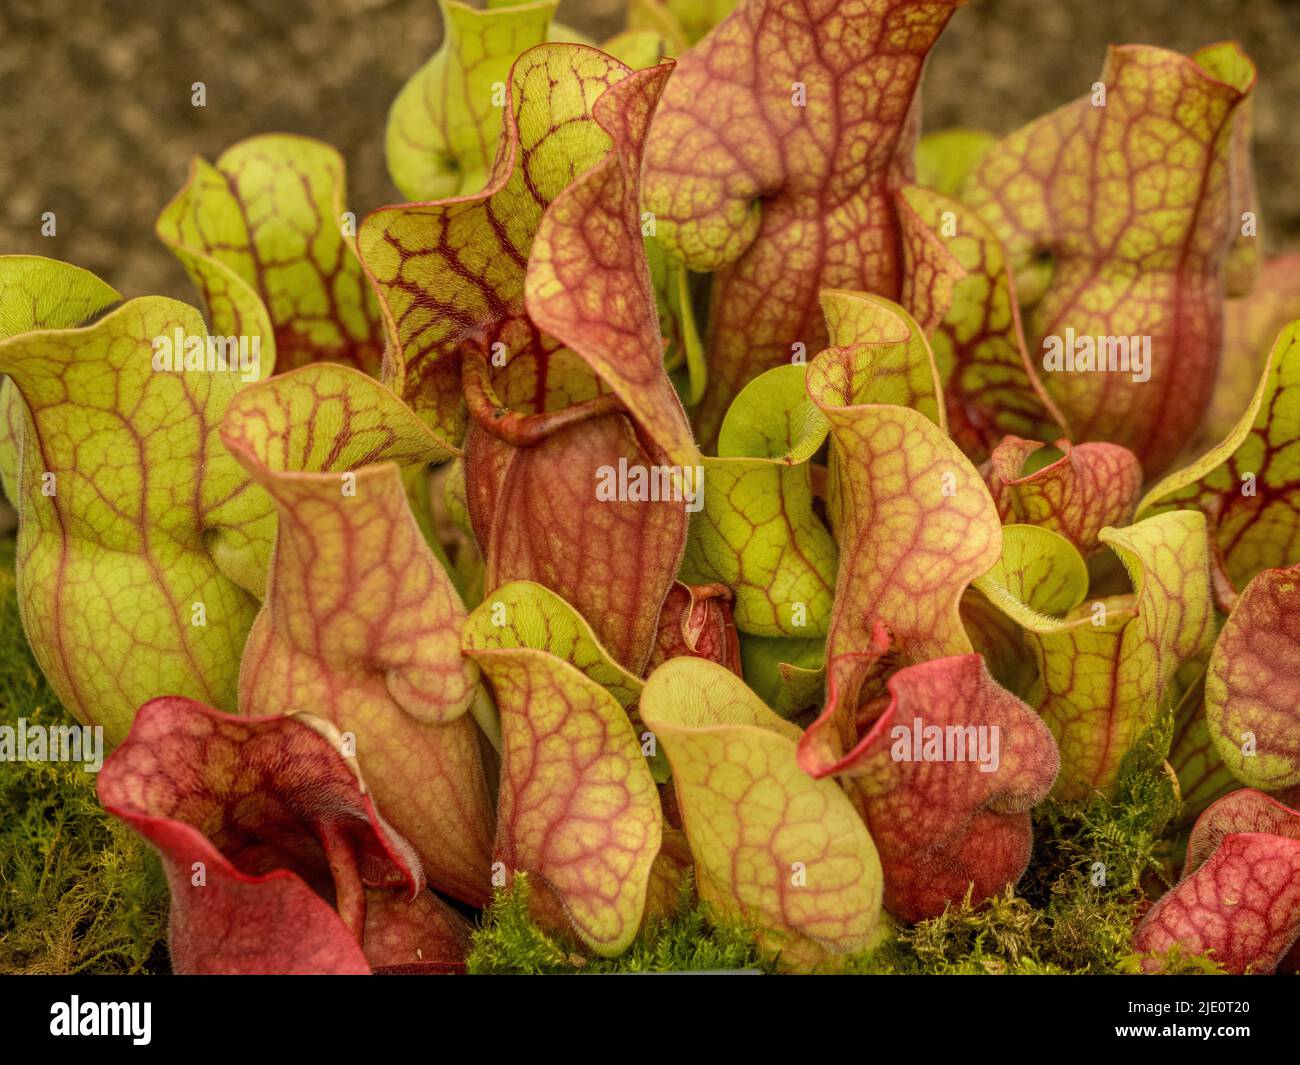 Sarracenia purpurea burkei also known as the Pitcher plant Stock Photo